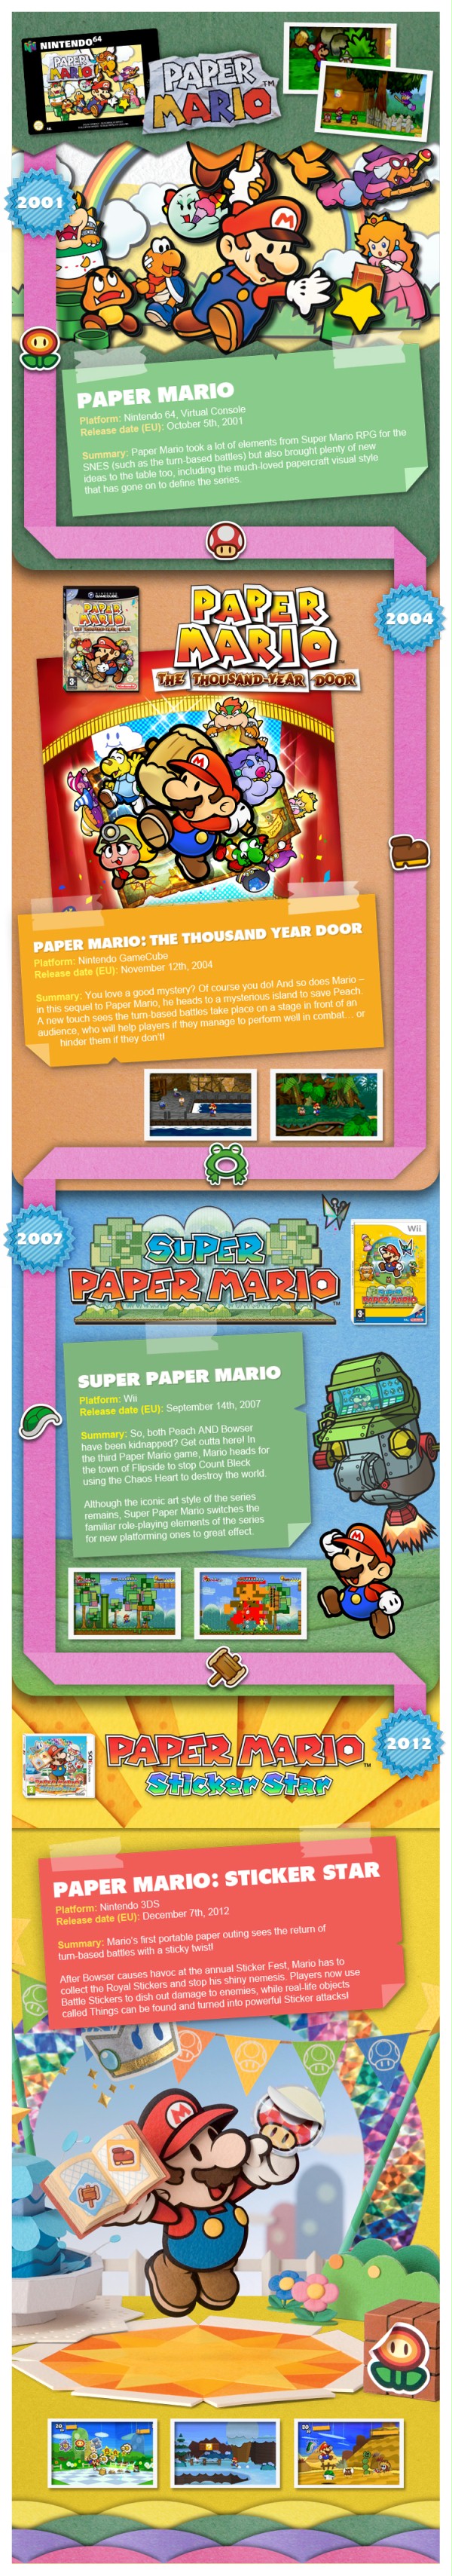 Nintendo Infographic – History of Paper Mario